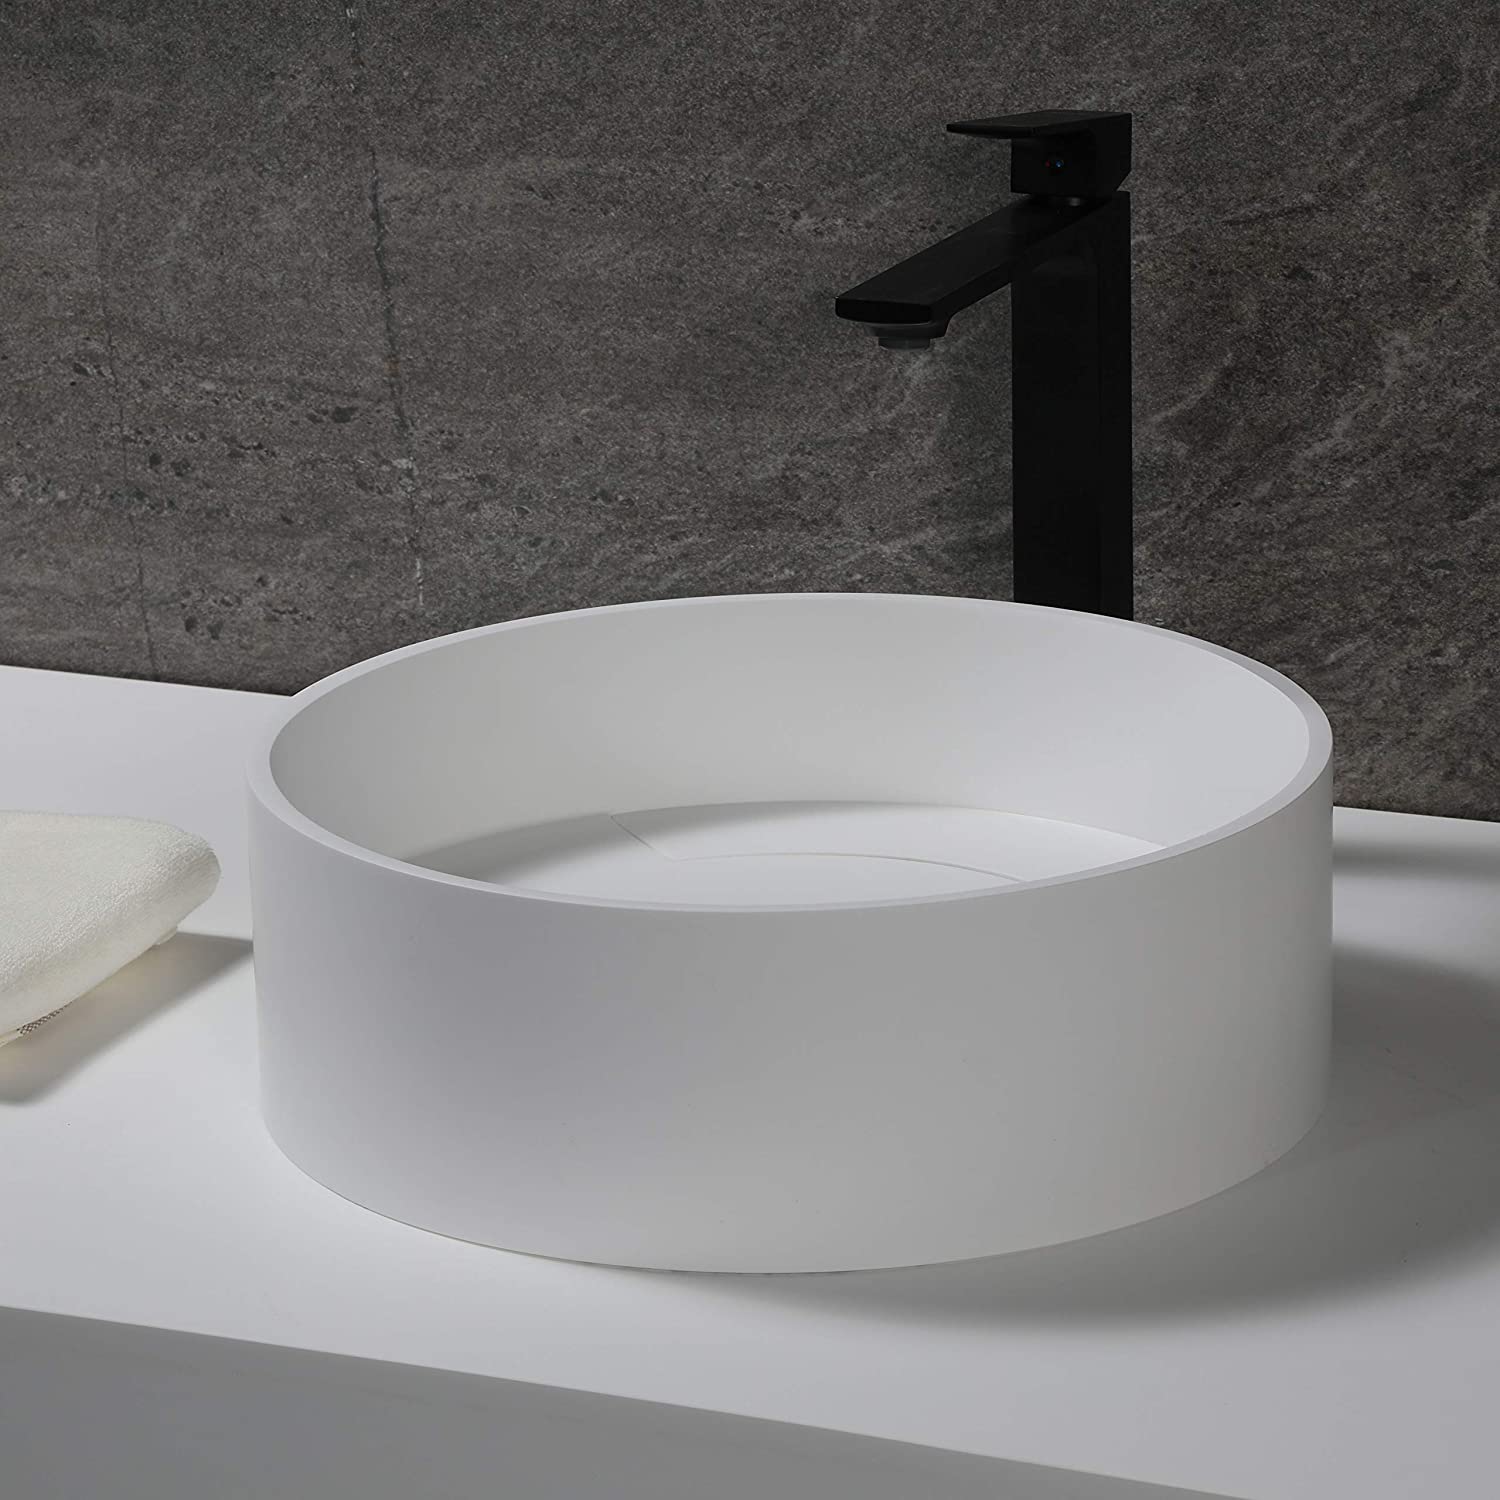 ALFI brand ABRS15R Bathroom Sink, White Matte